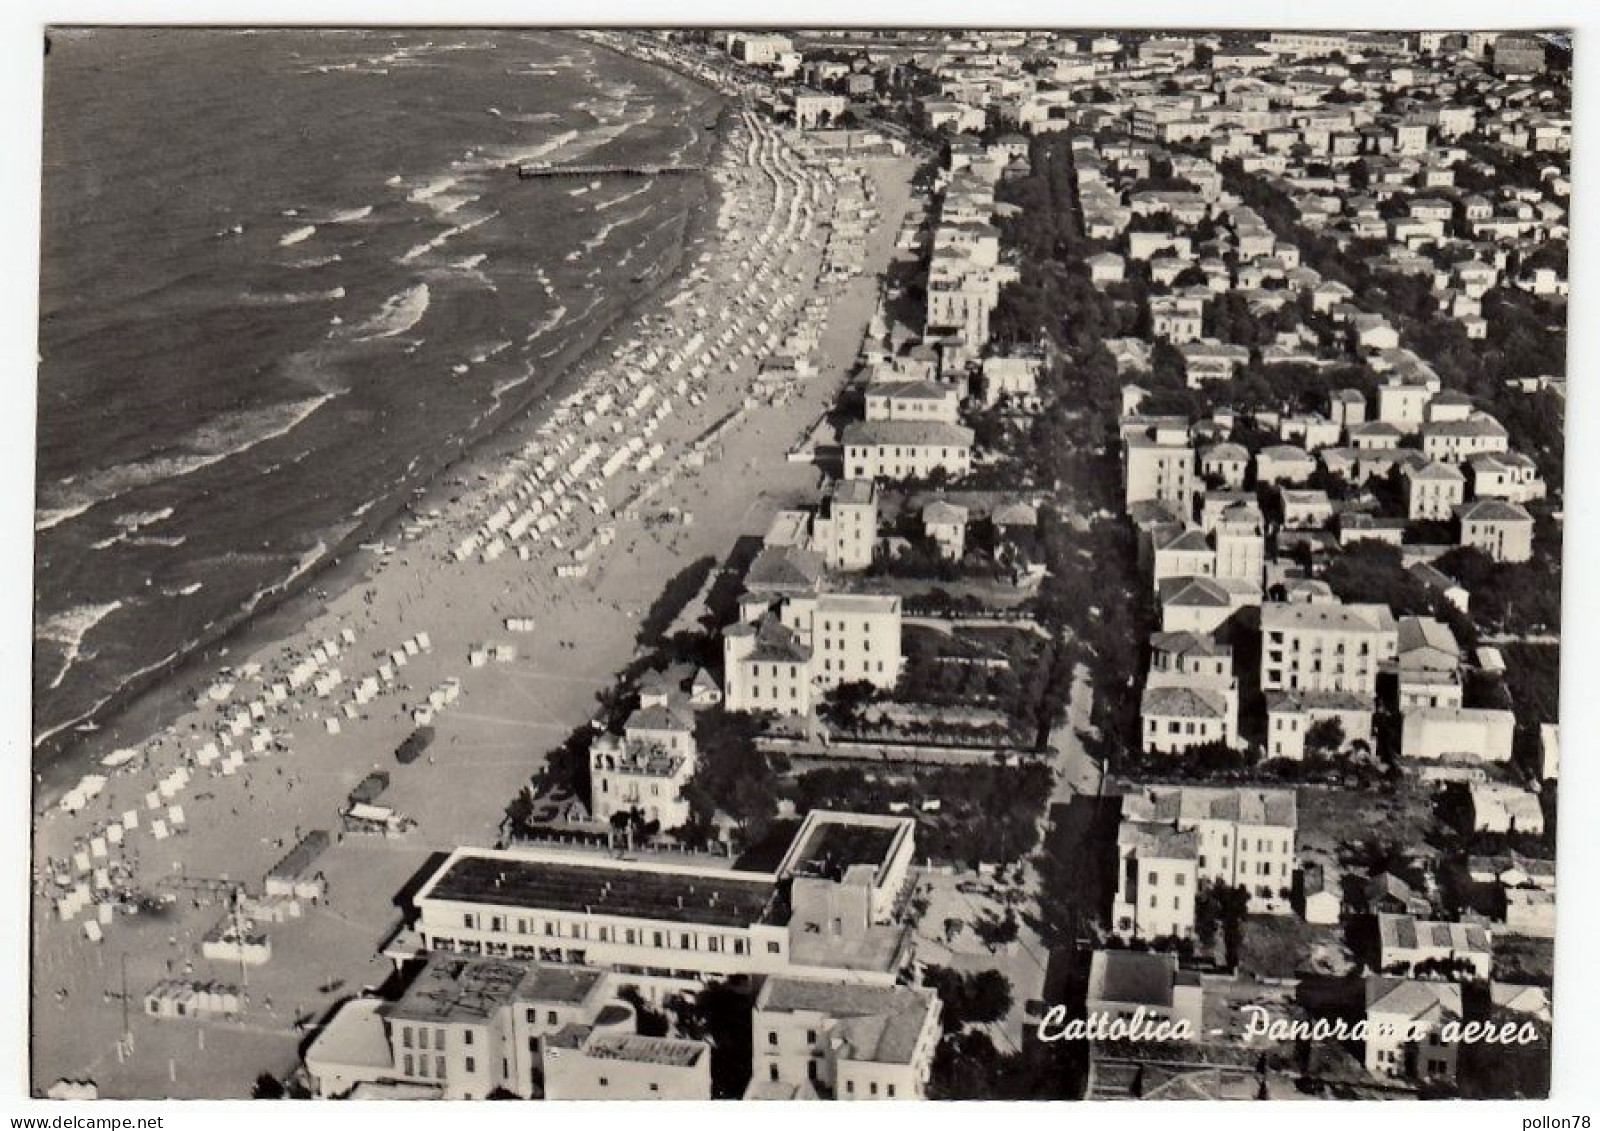 CATTOLICA - PANORAMA AEREO - RIMINI - 1956 - Rimini